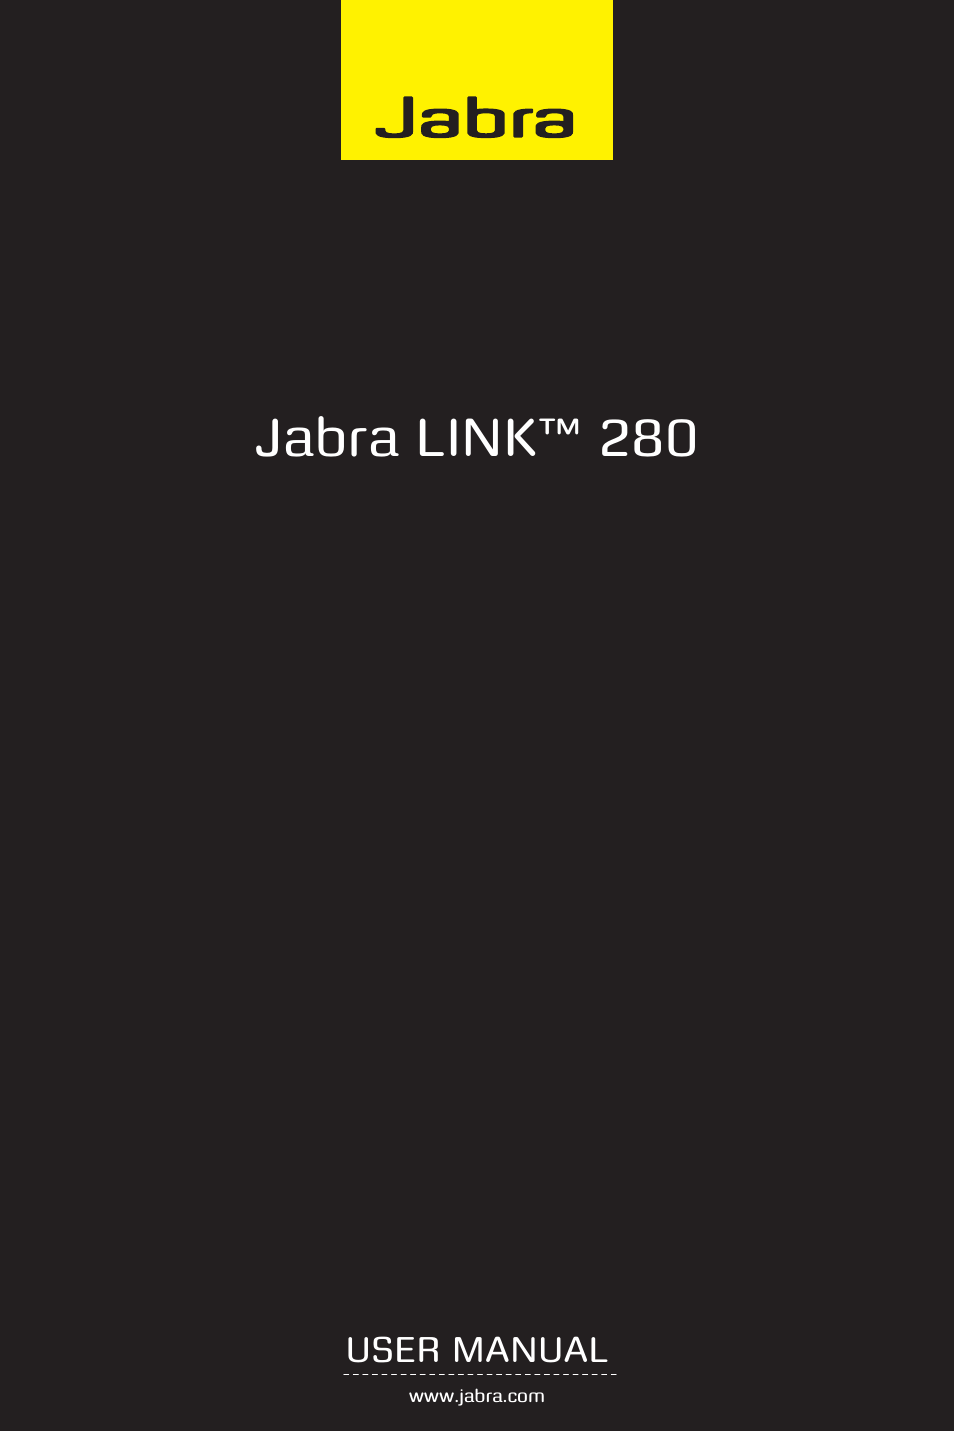 LINK 280